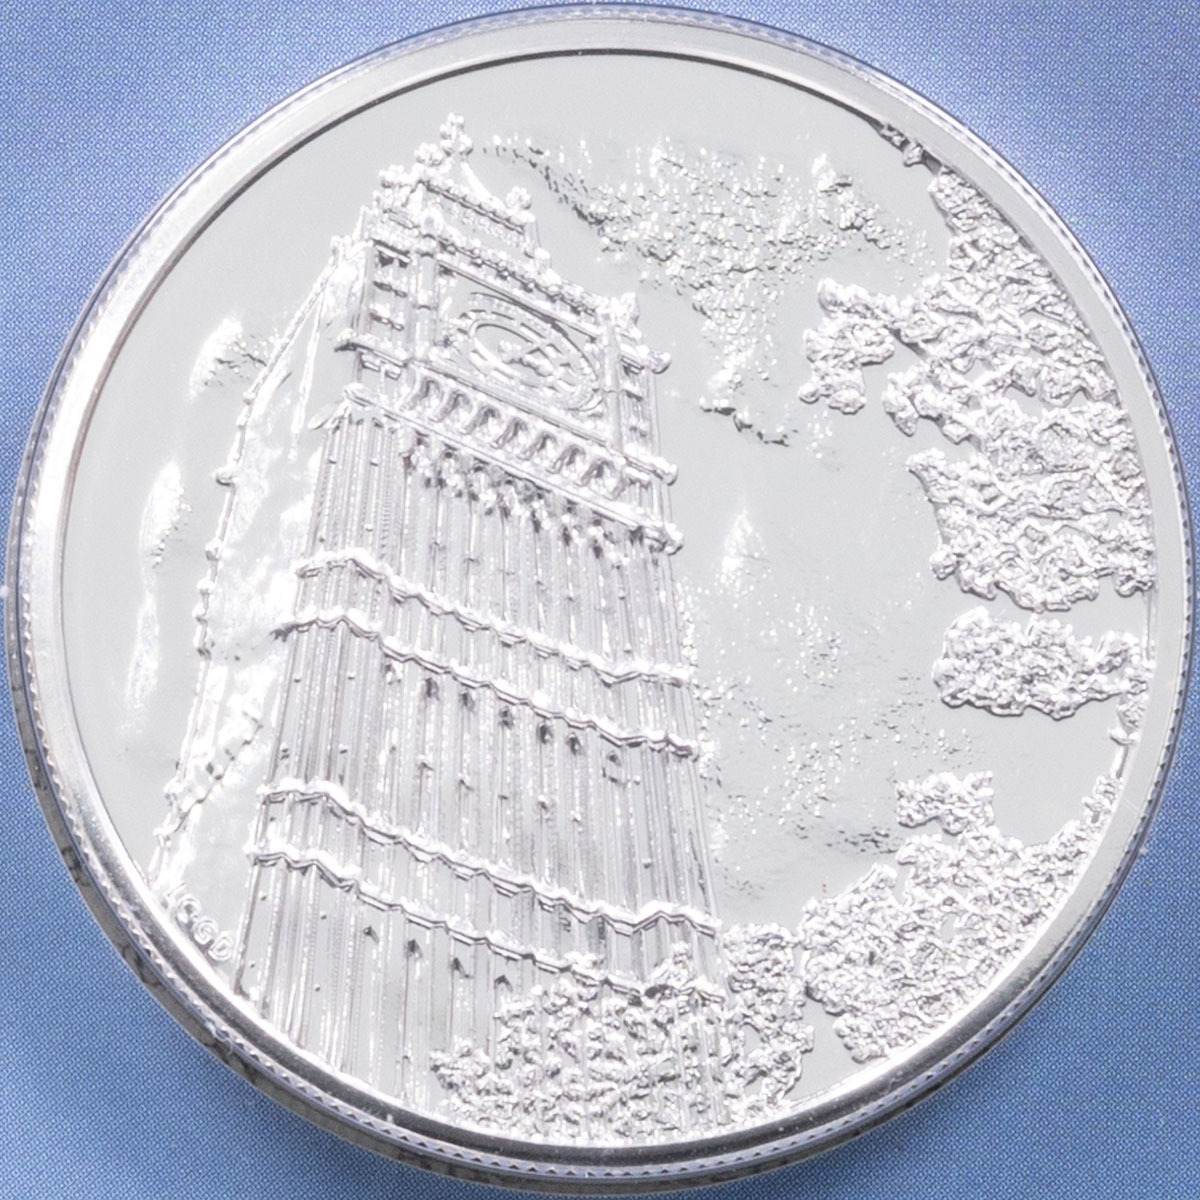 UK15100BU 2015 Big Ben Elizabeth Tower One Hundred Pound Silver Brilliant Uncirculated Coin In Folder Reverse